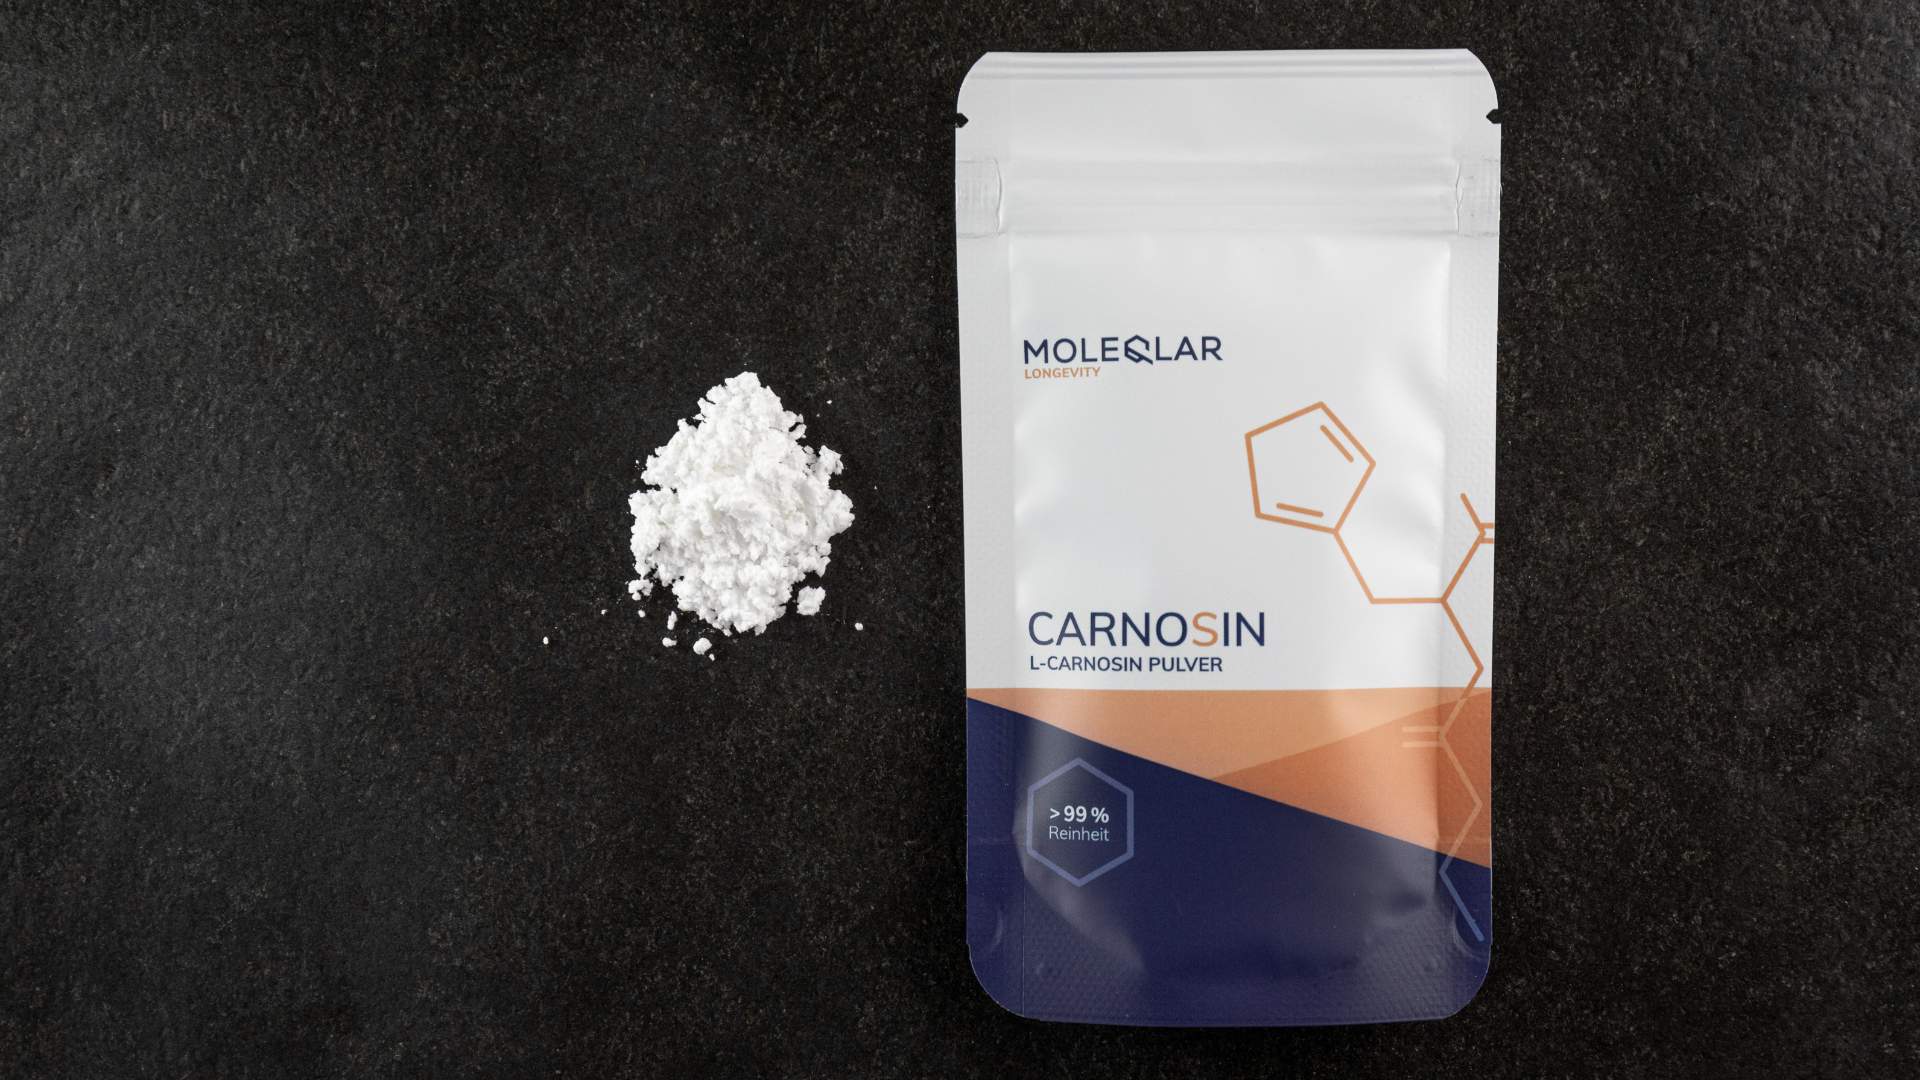 Carnosin Pulver Moleqlar Sugar Stabilizer Kit